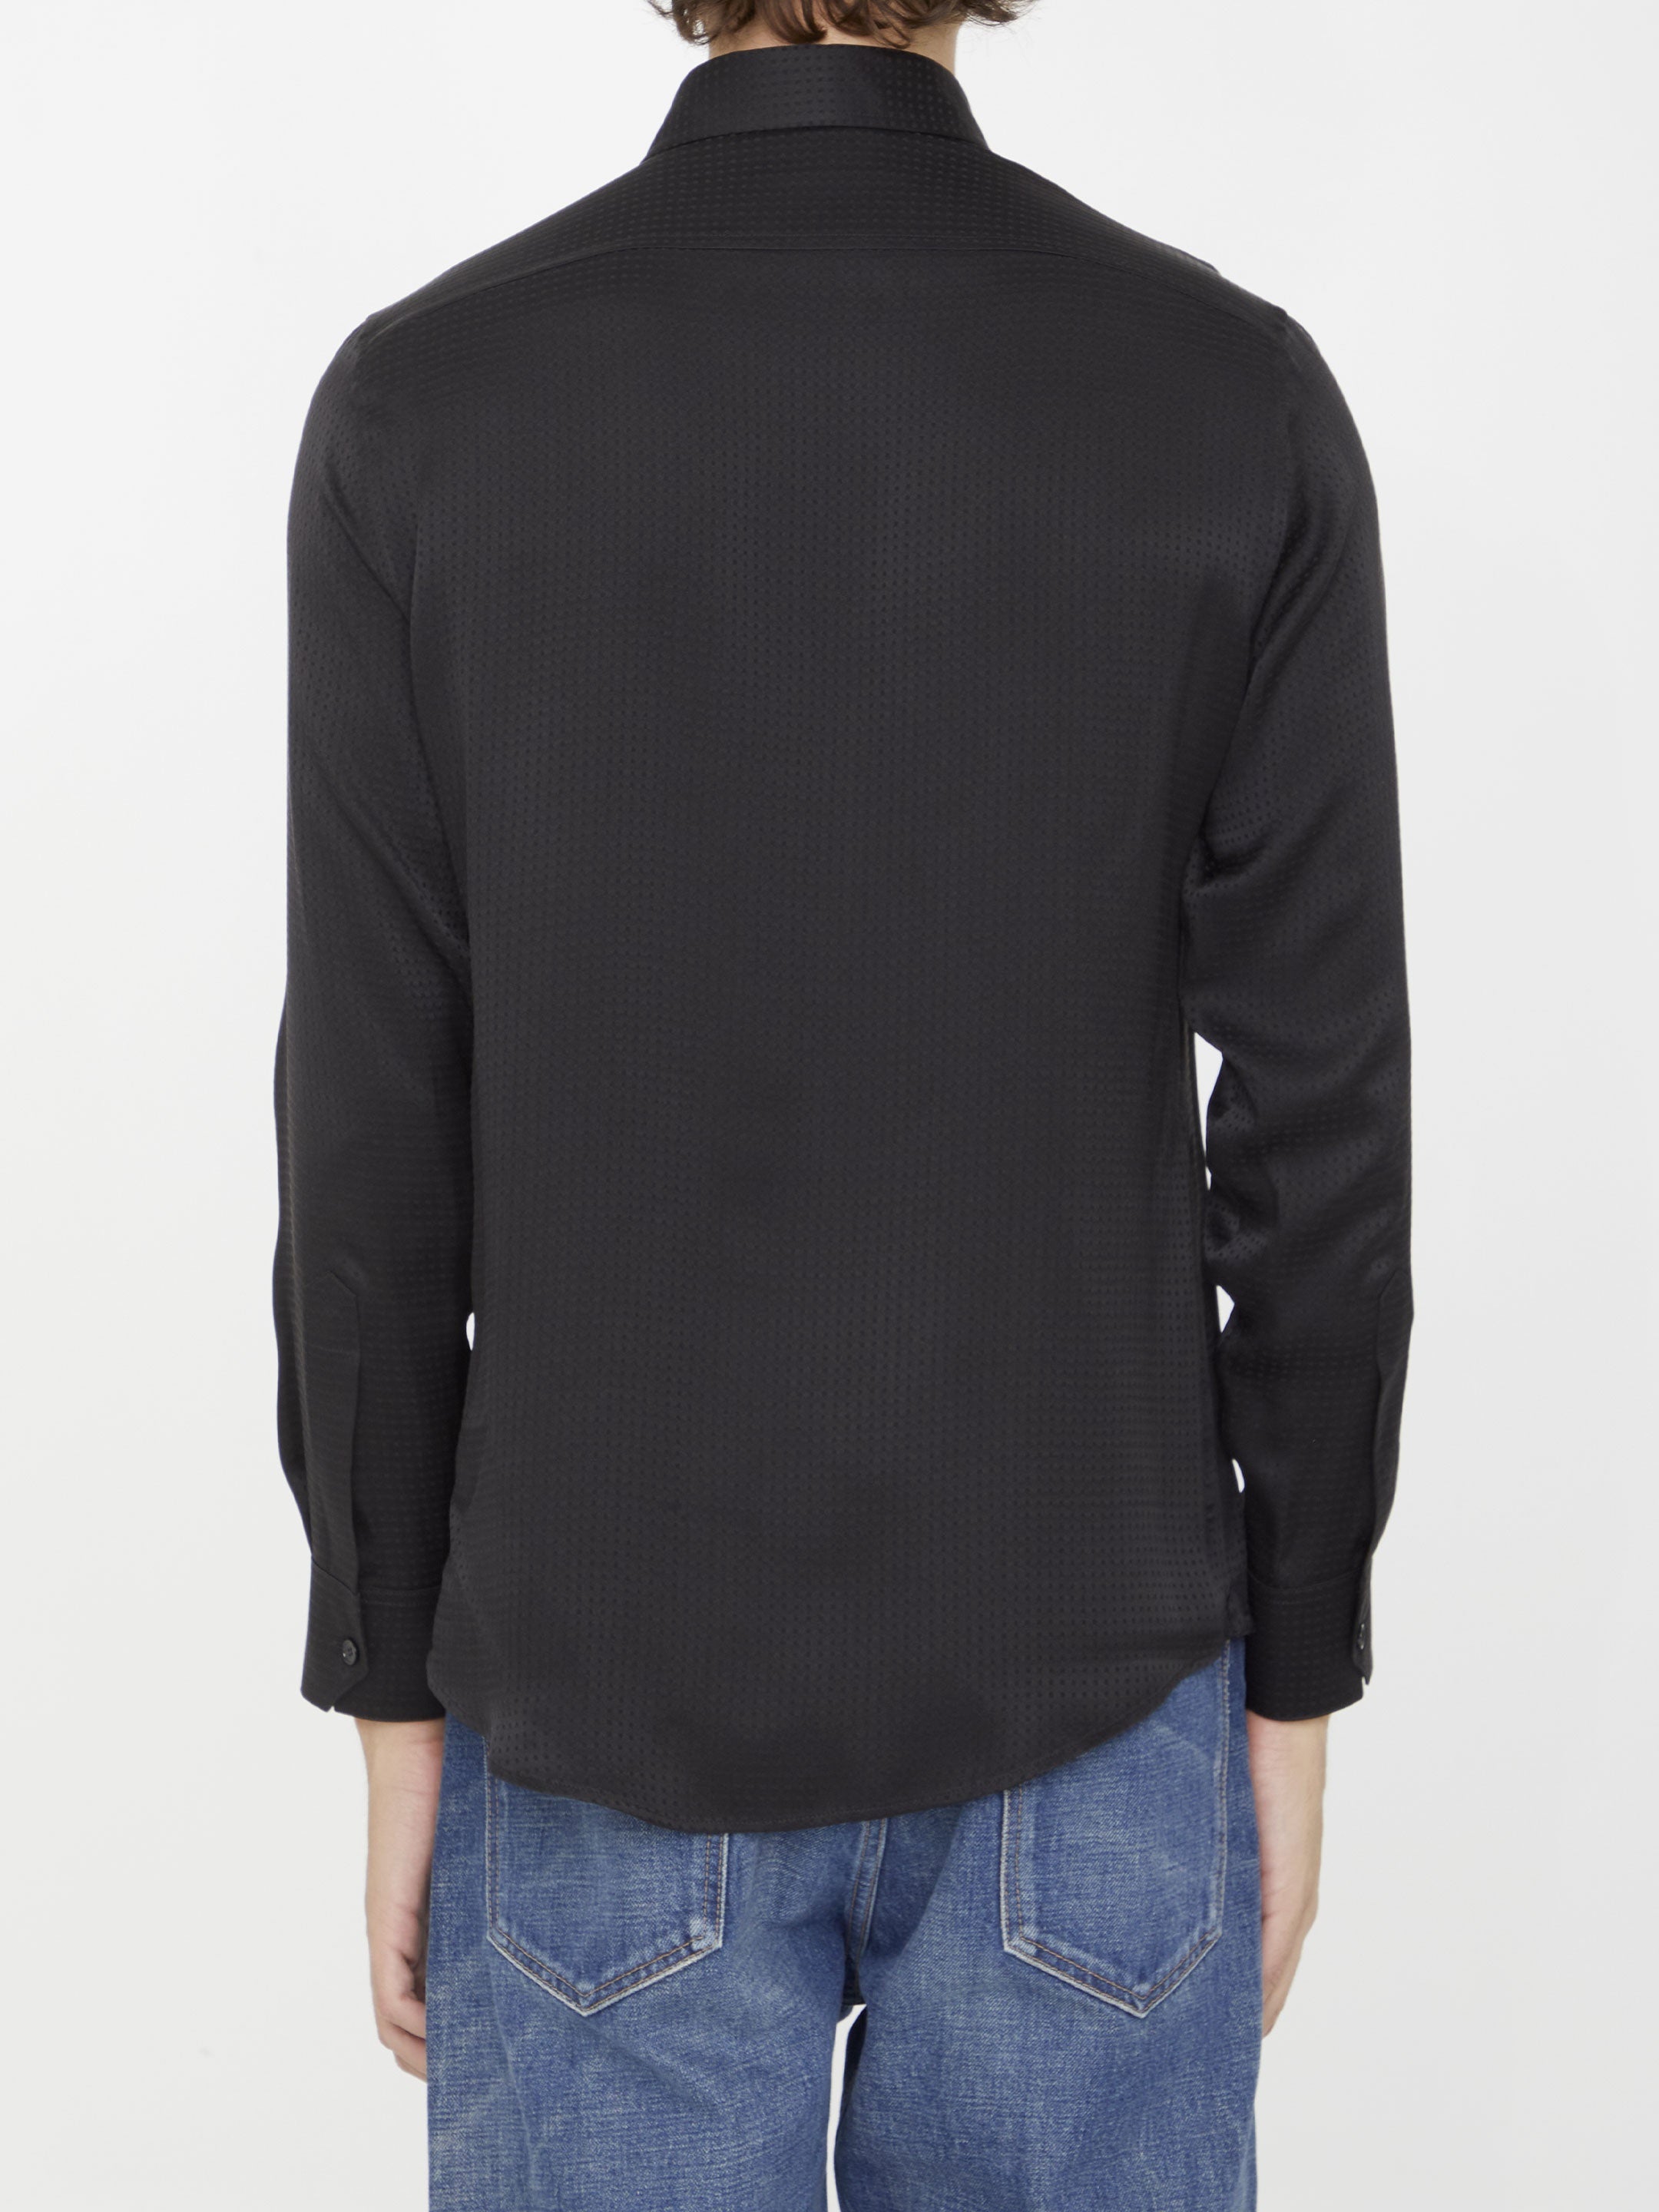 CELINE-OUTLET-SALE-Black-silk-shirt-Shirts-ARCHIVE-COLLECTION-4.jpg